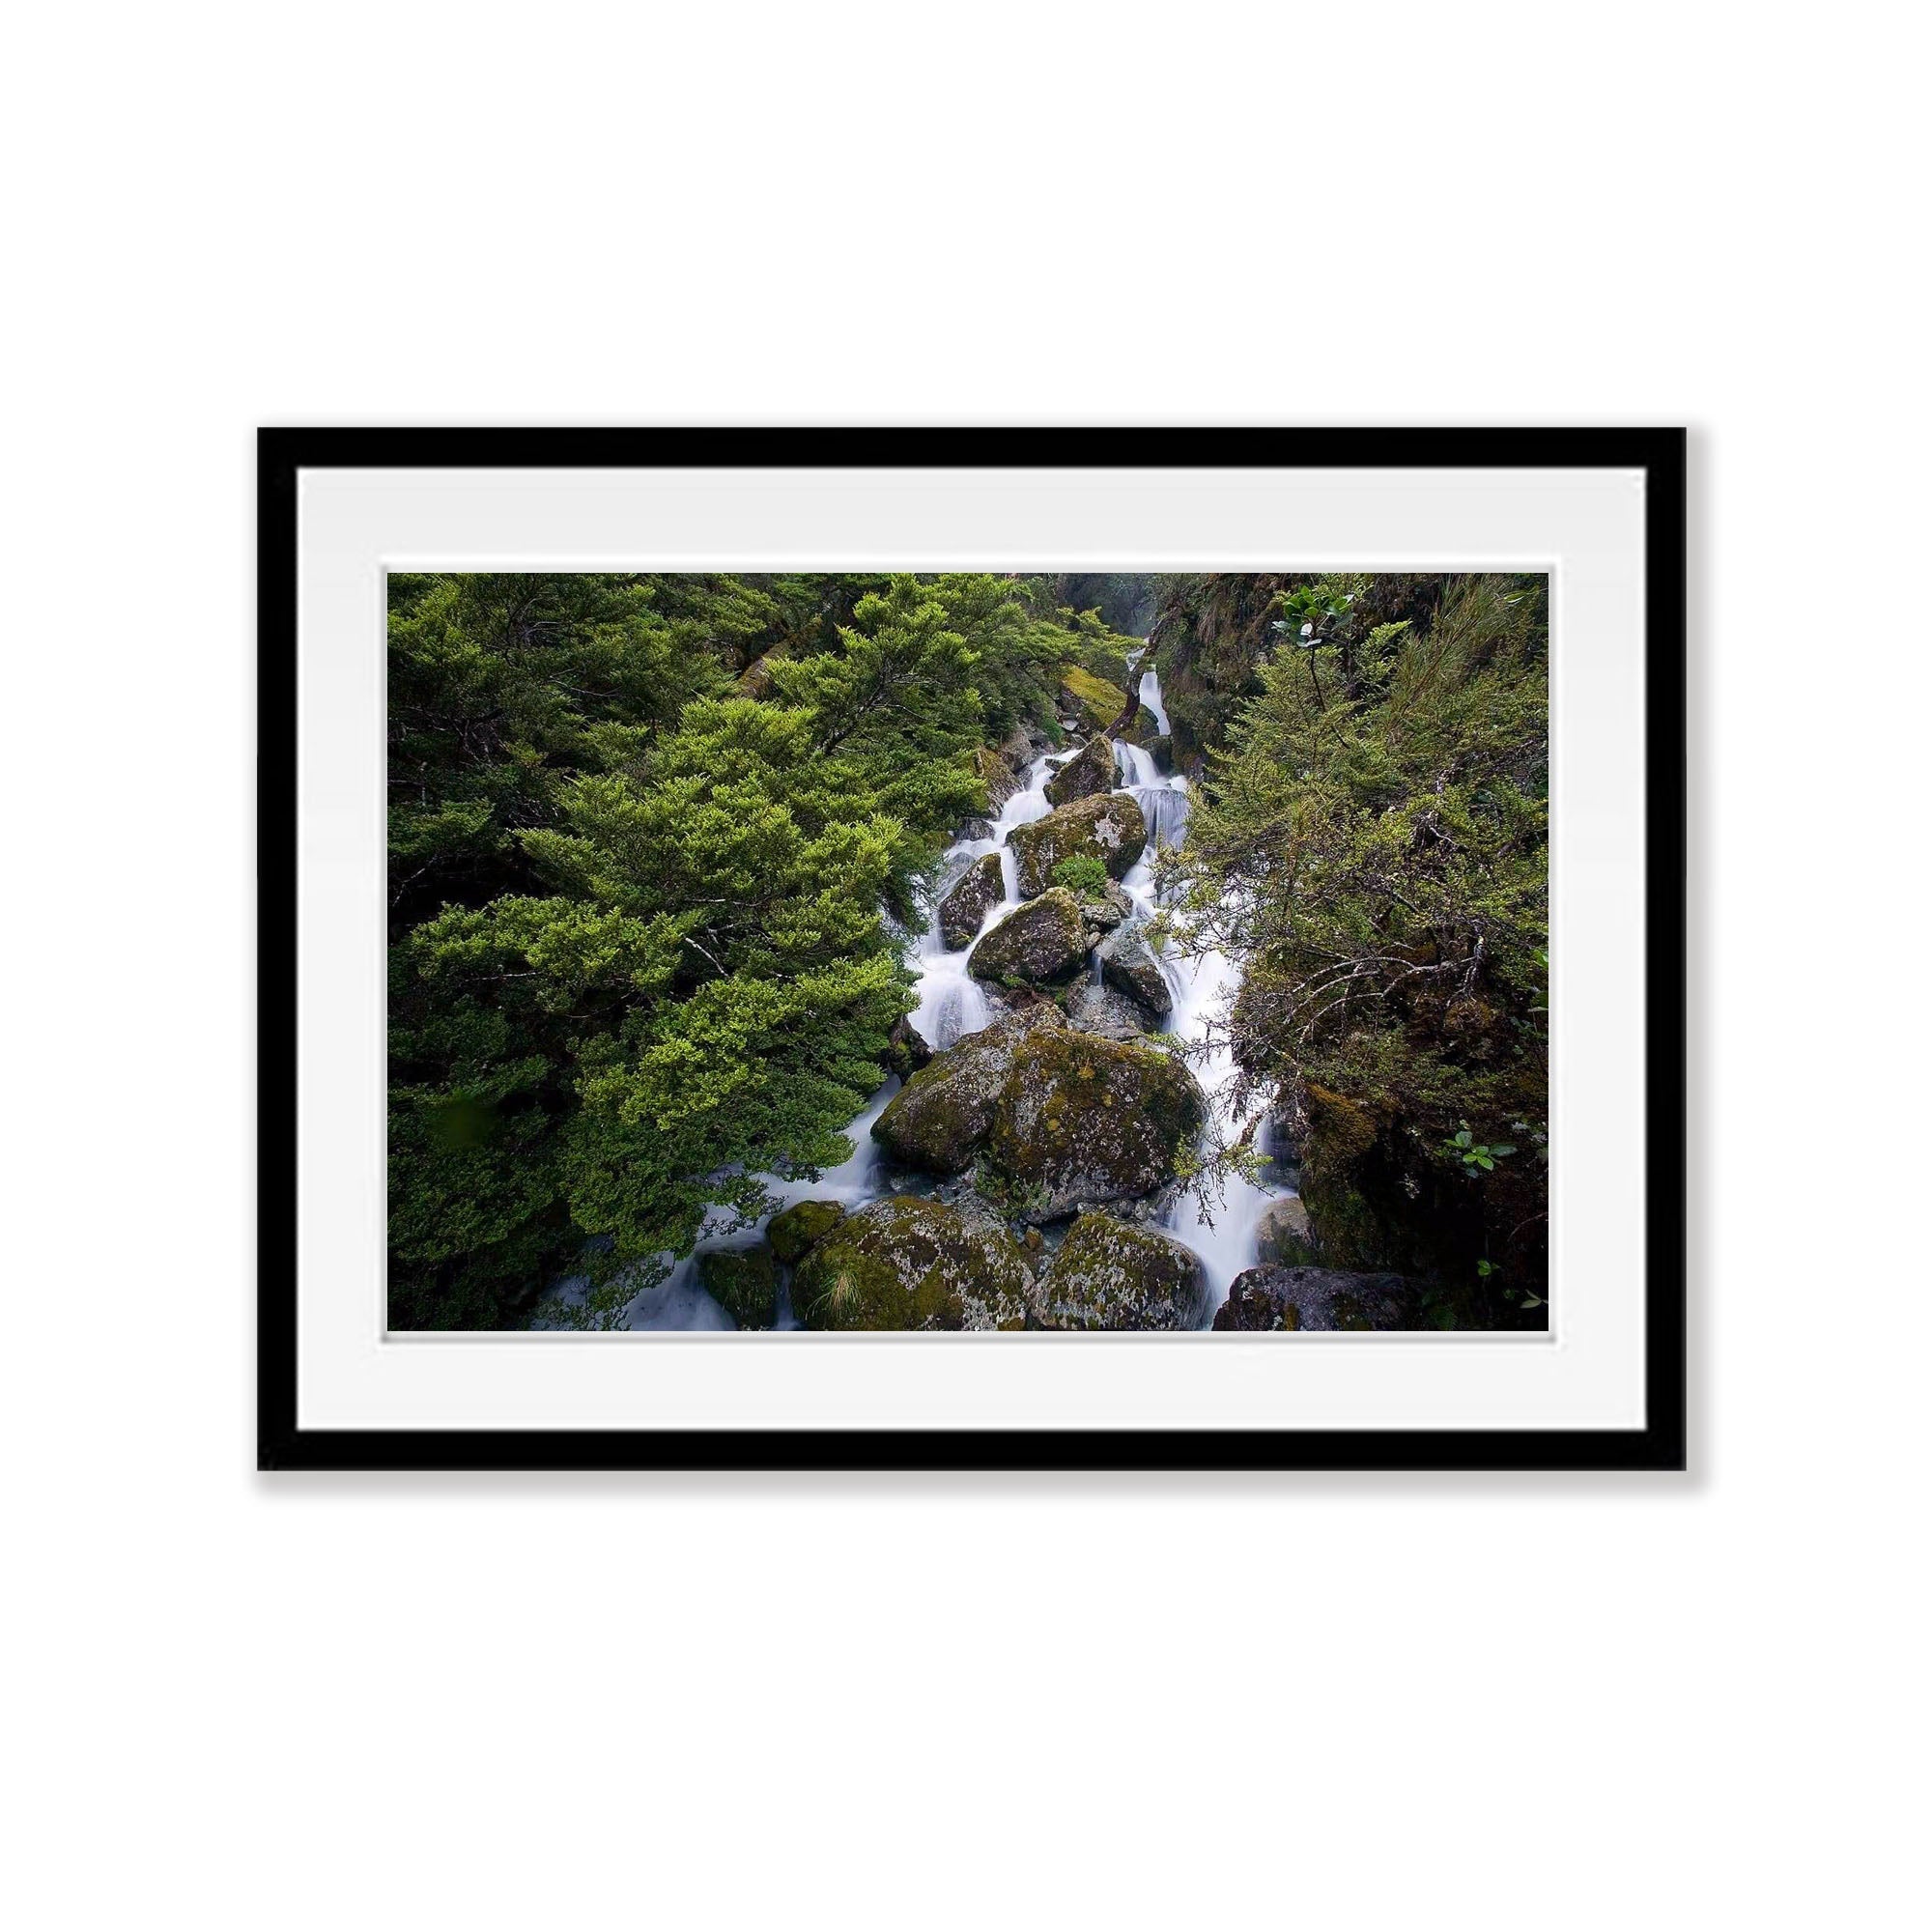 Waterfall 4, Milford Track - New Zealand